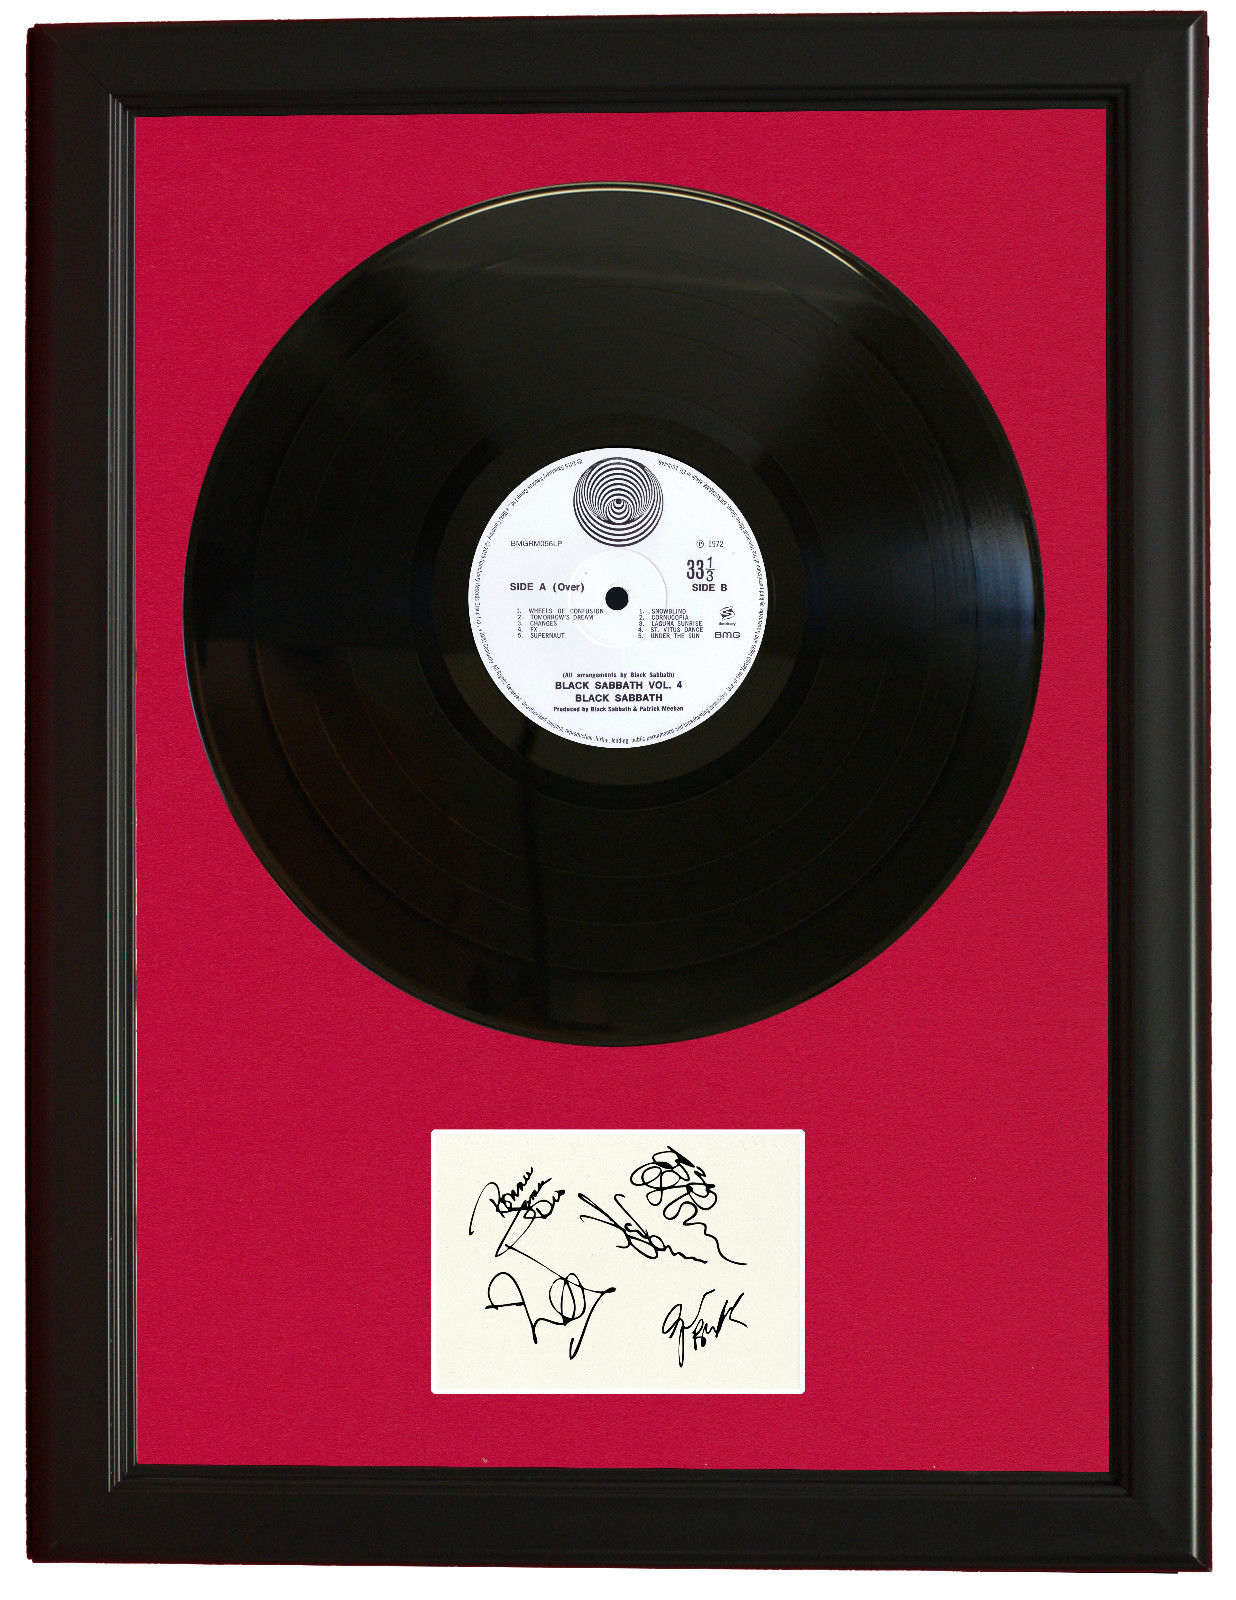 Black Sabbath Black Wood Framed Vinyl Lp Signature Display - Gold Record  Outlet Album and Disc Collectible Memorabilia